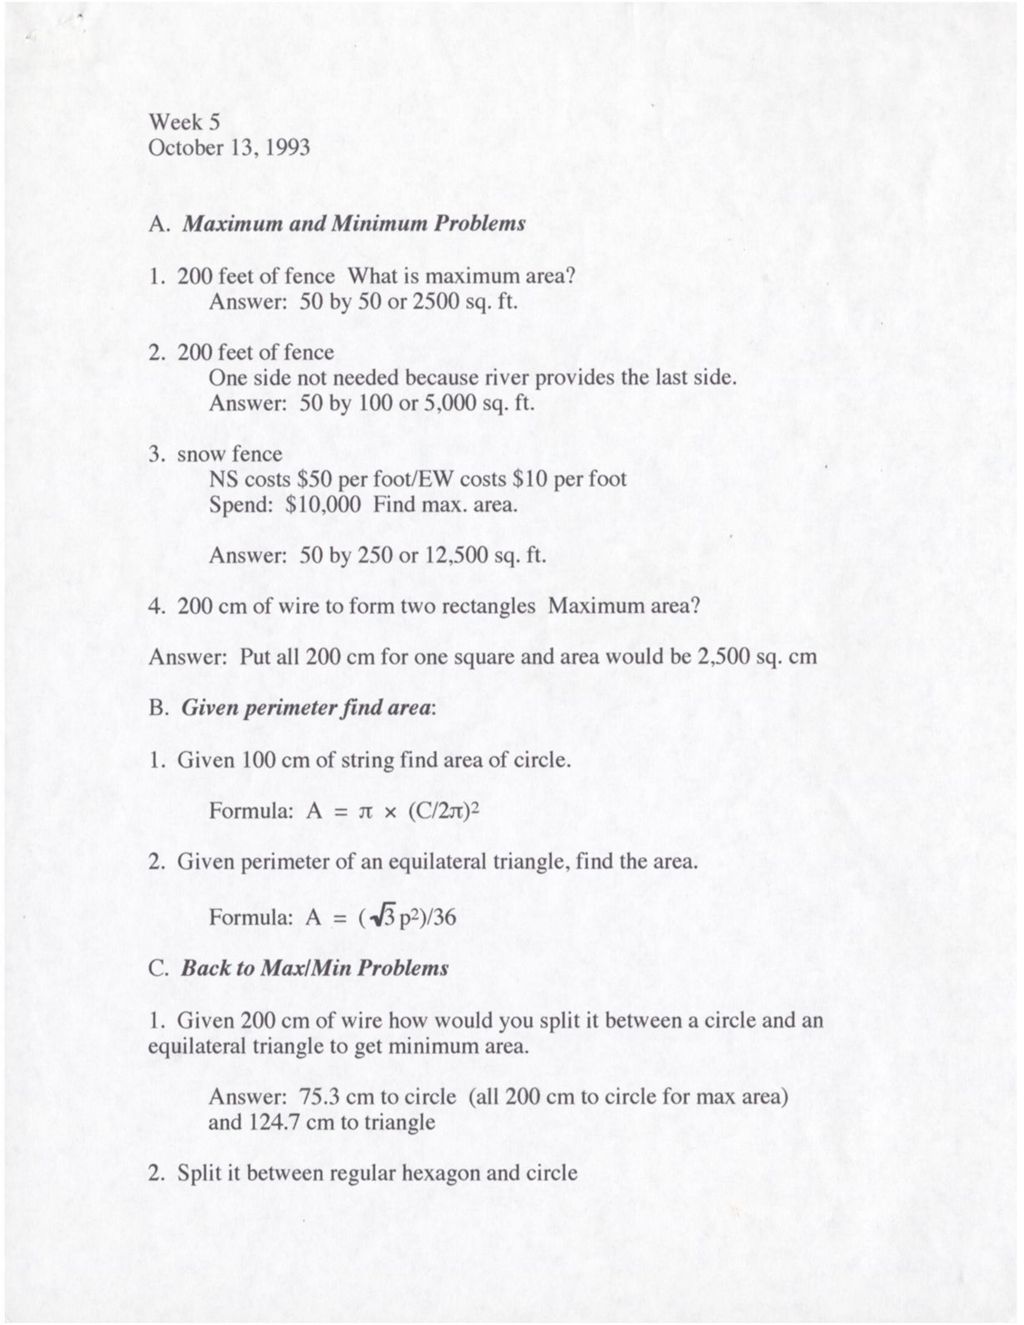 Week 5 1993 Maximum and Minimum Problems w/ answers